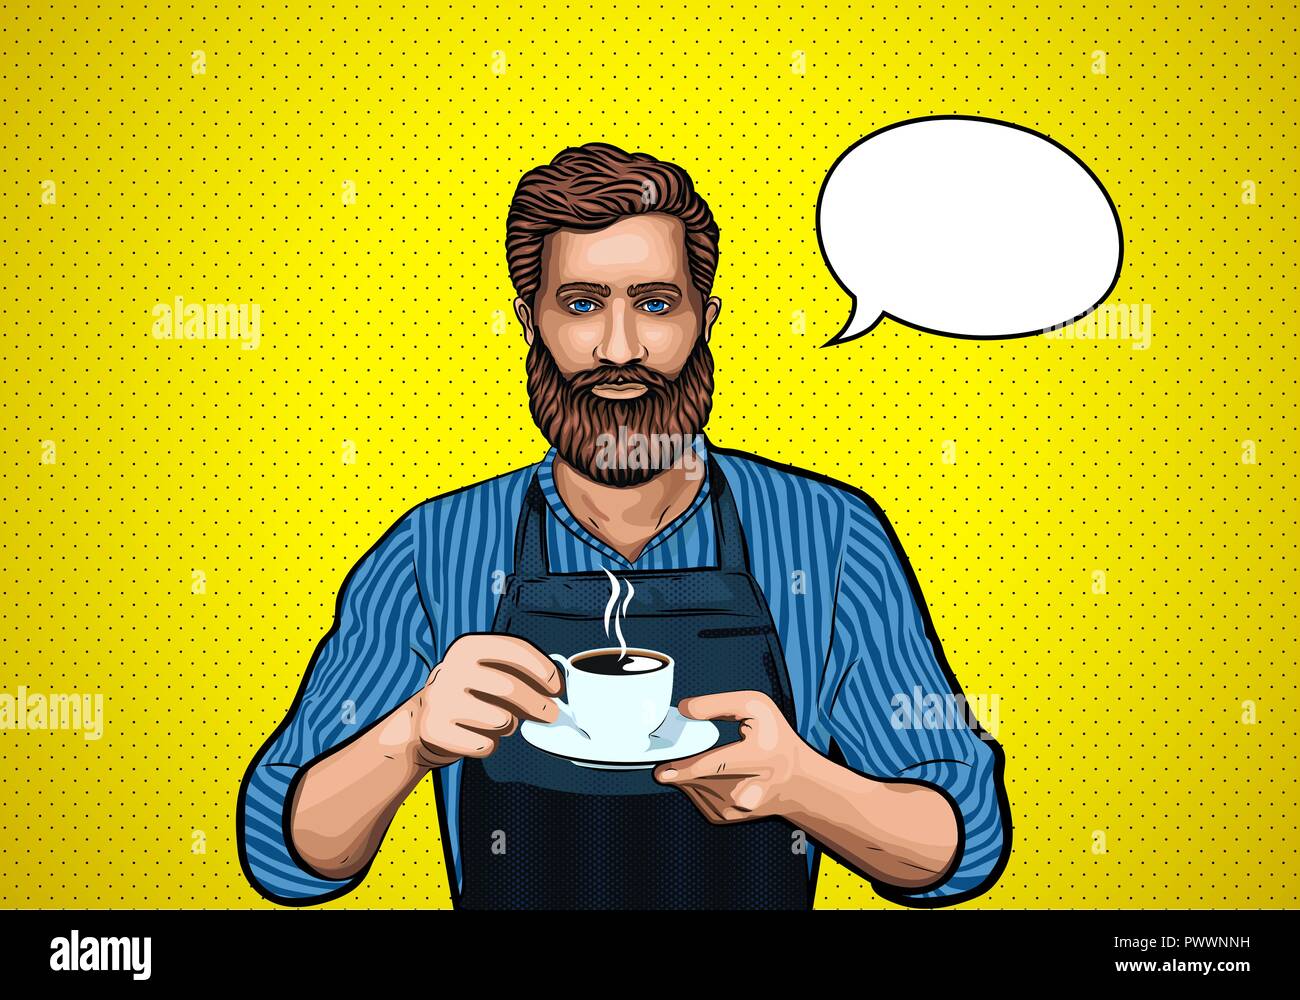 Barista mann Bart. Heißer Kaffee. Pop Art Illustration. Business Café, Kaffee, Vector Illustration. Hipster Mann mit Bart und Kaffee Tasse. Stock Vektor